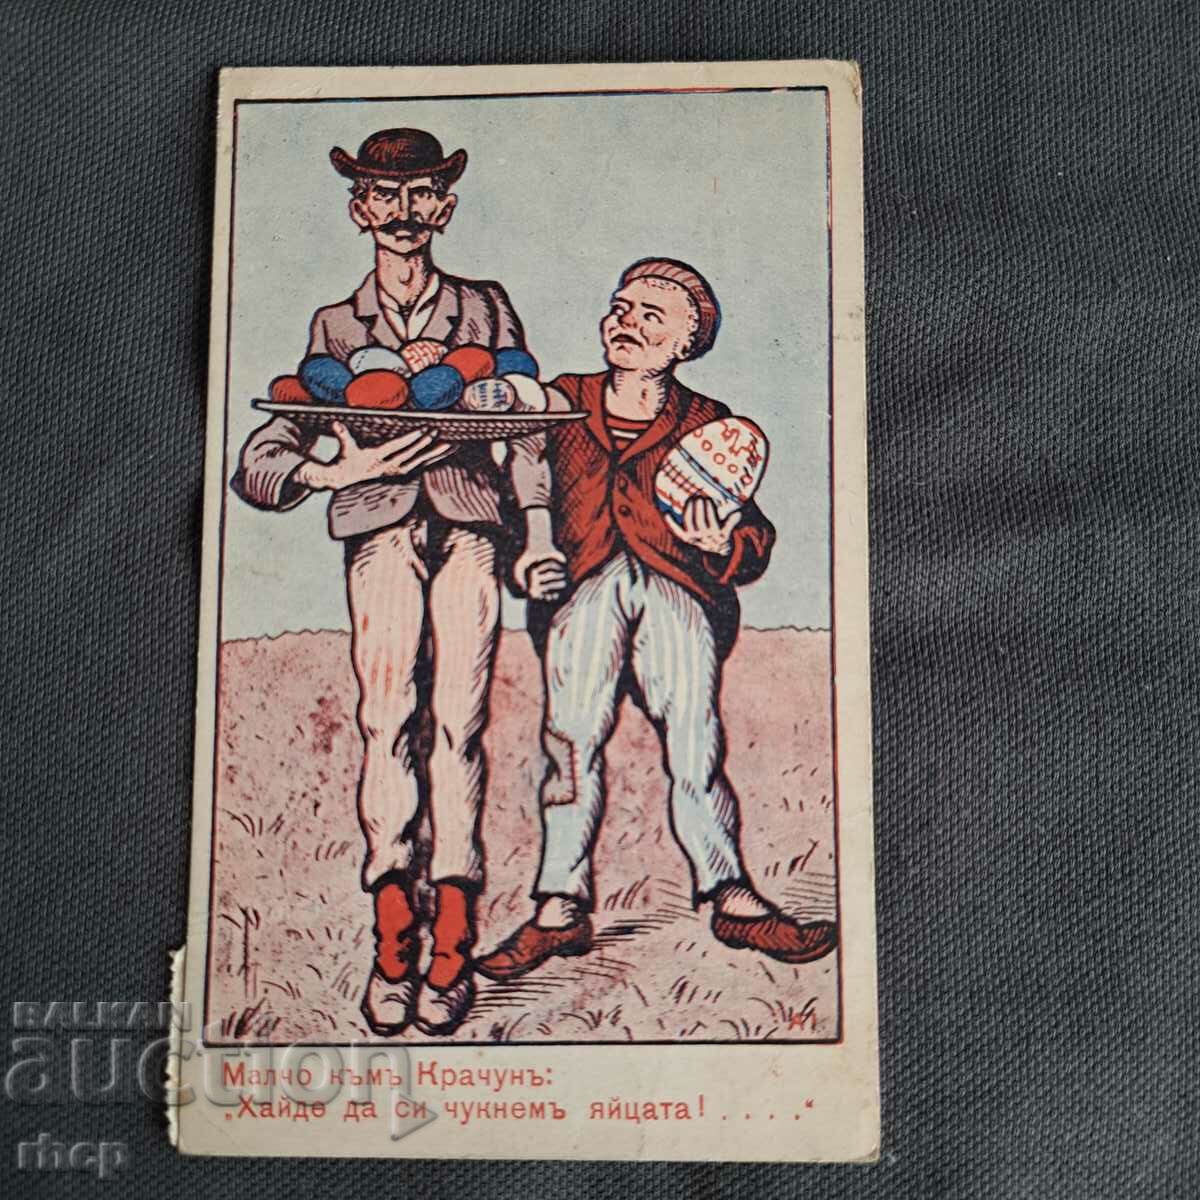 1926 Carte poștală Krachun și Malcho Easter Eggs